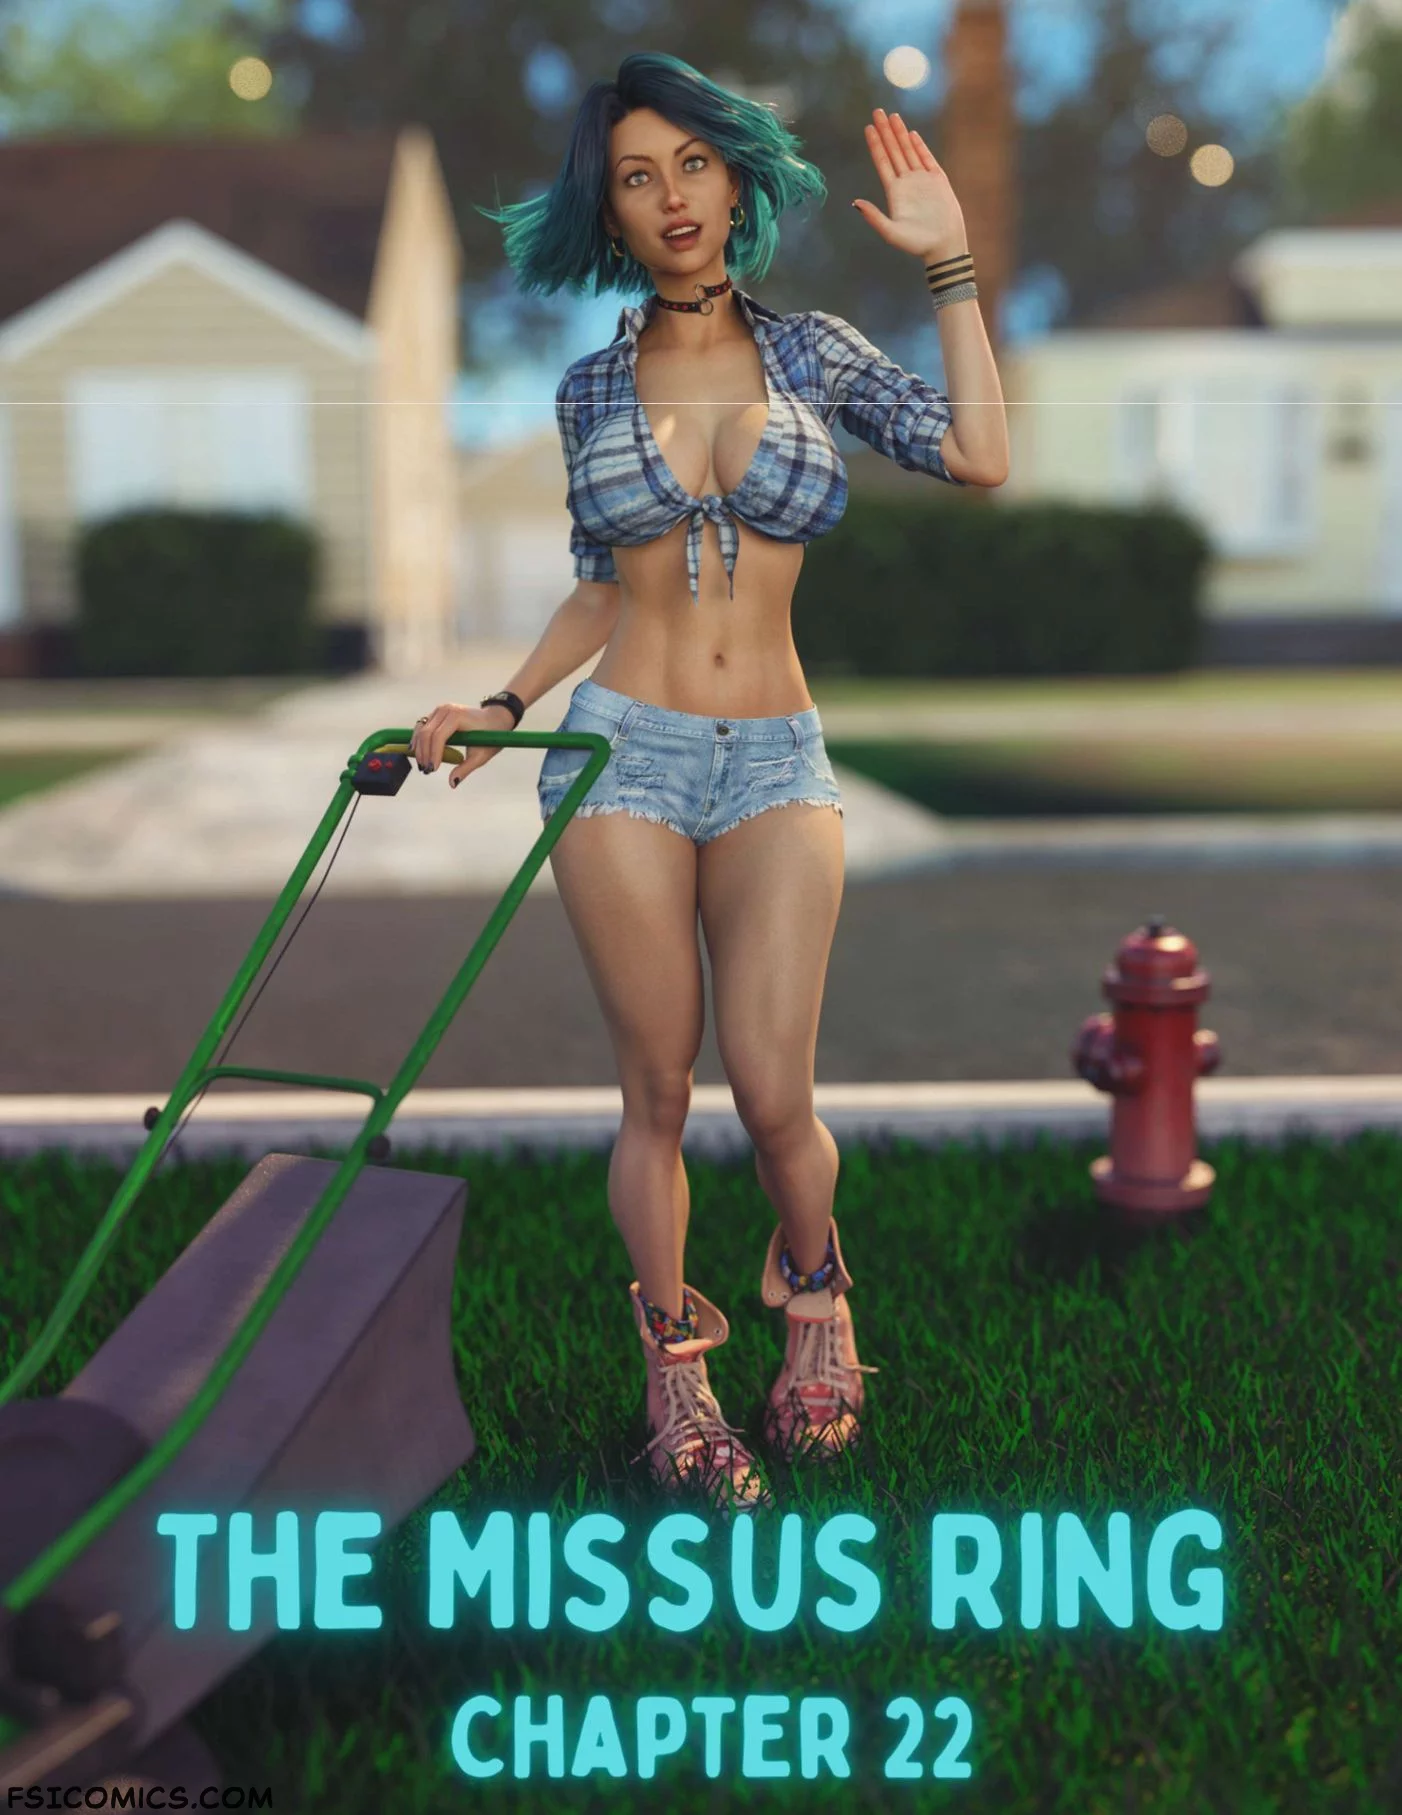 The Missus Ring Chapter 22 - Lexx228 | RawlyRawls - 115 - FSIComics